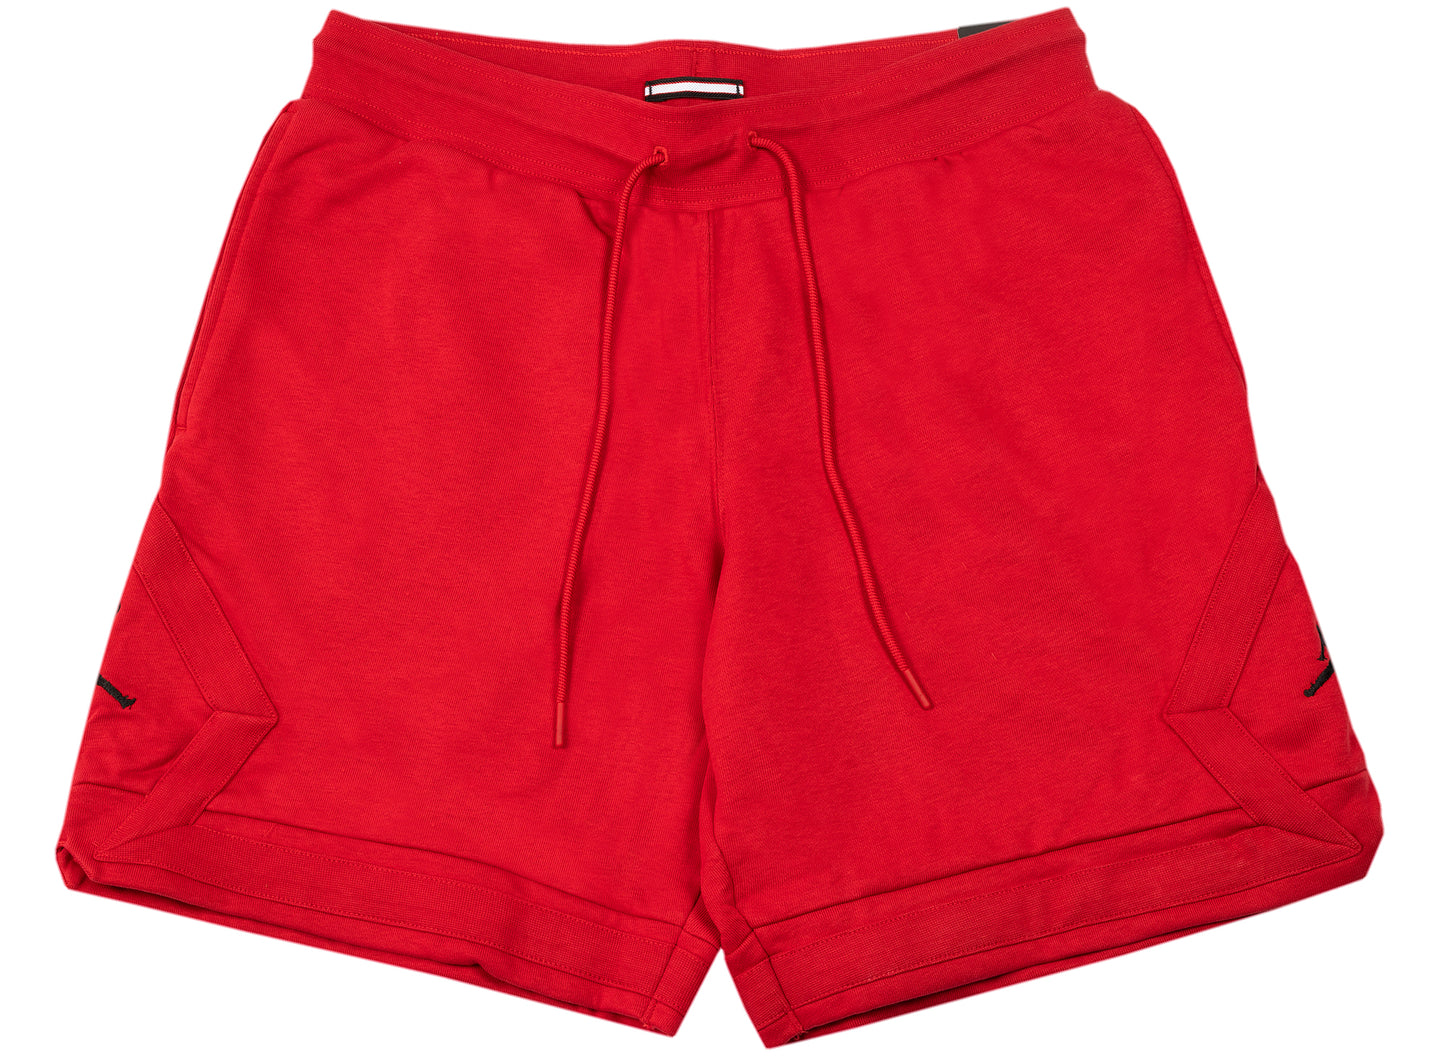 Jordan Jumpman Diamond Fleece Shorts in Red